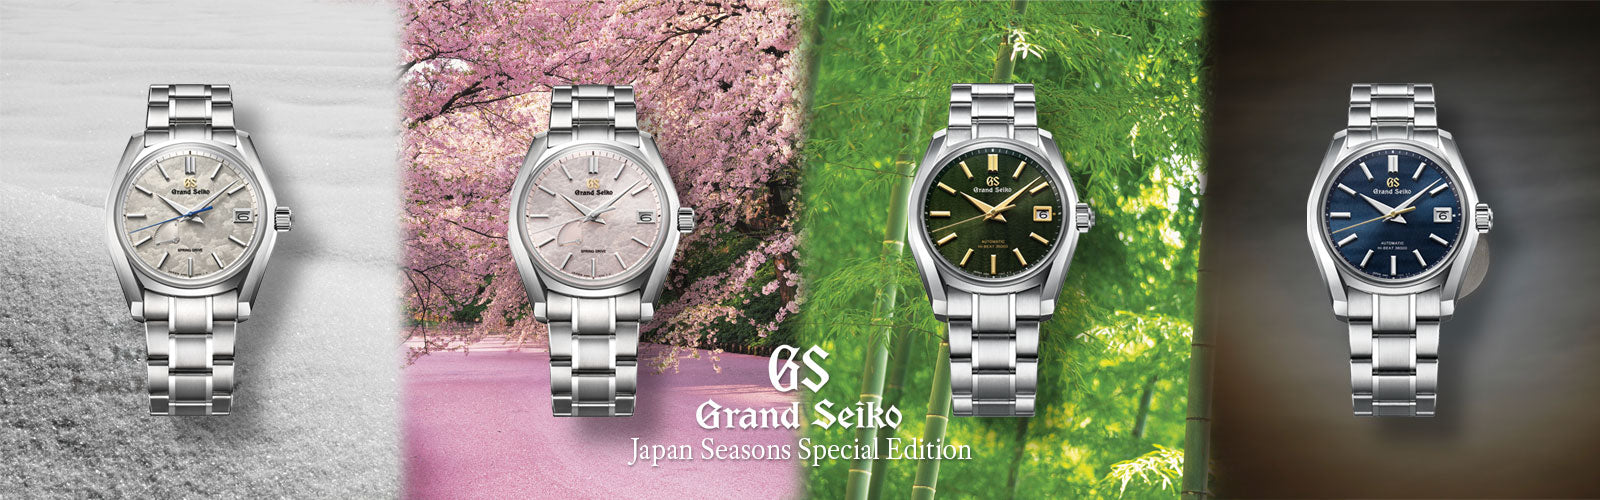 Grand Seiko Watches | Schwanke-Kasten Jewelers Tagged 